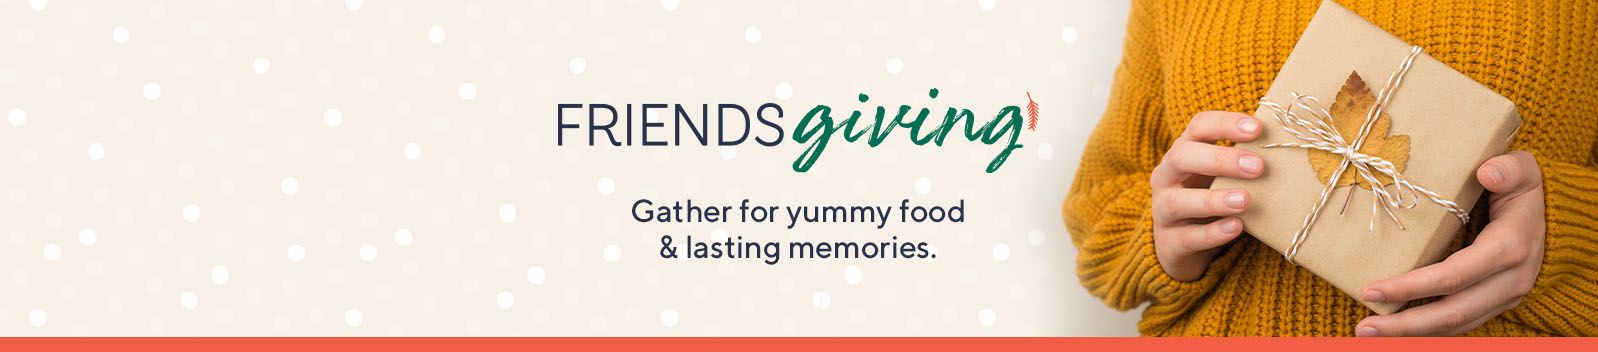 Friendsgiving. Gather for yummy food & lasting memories.